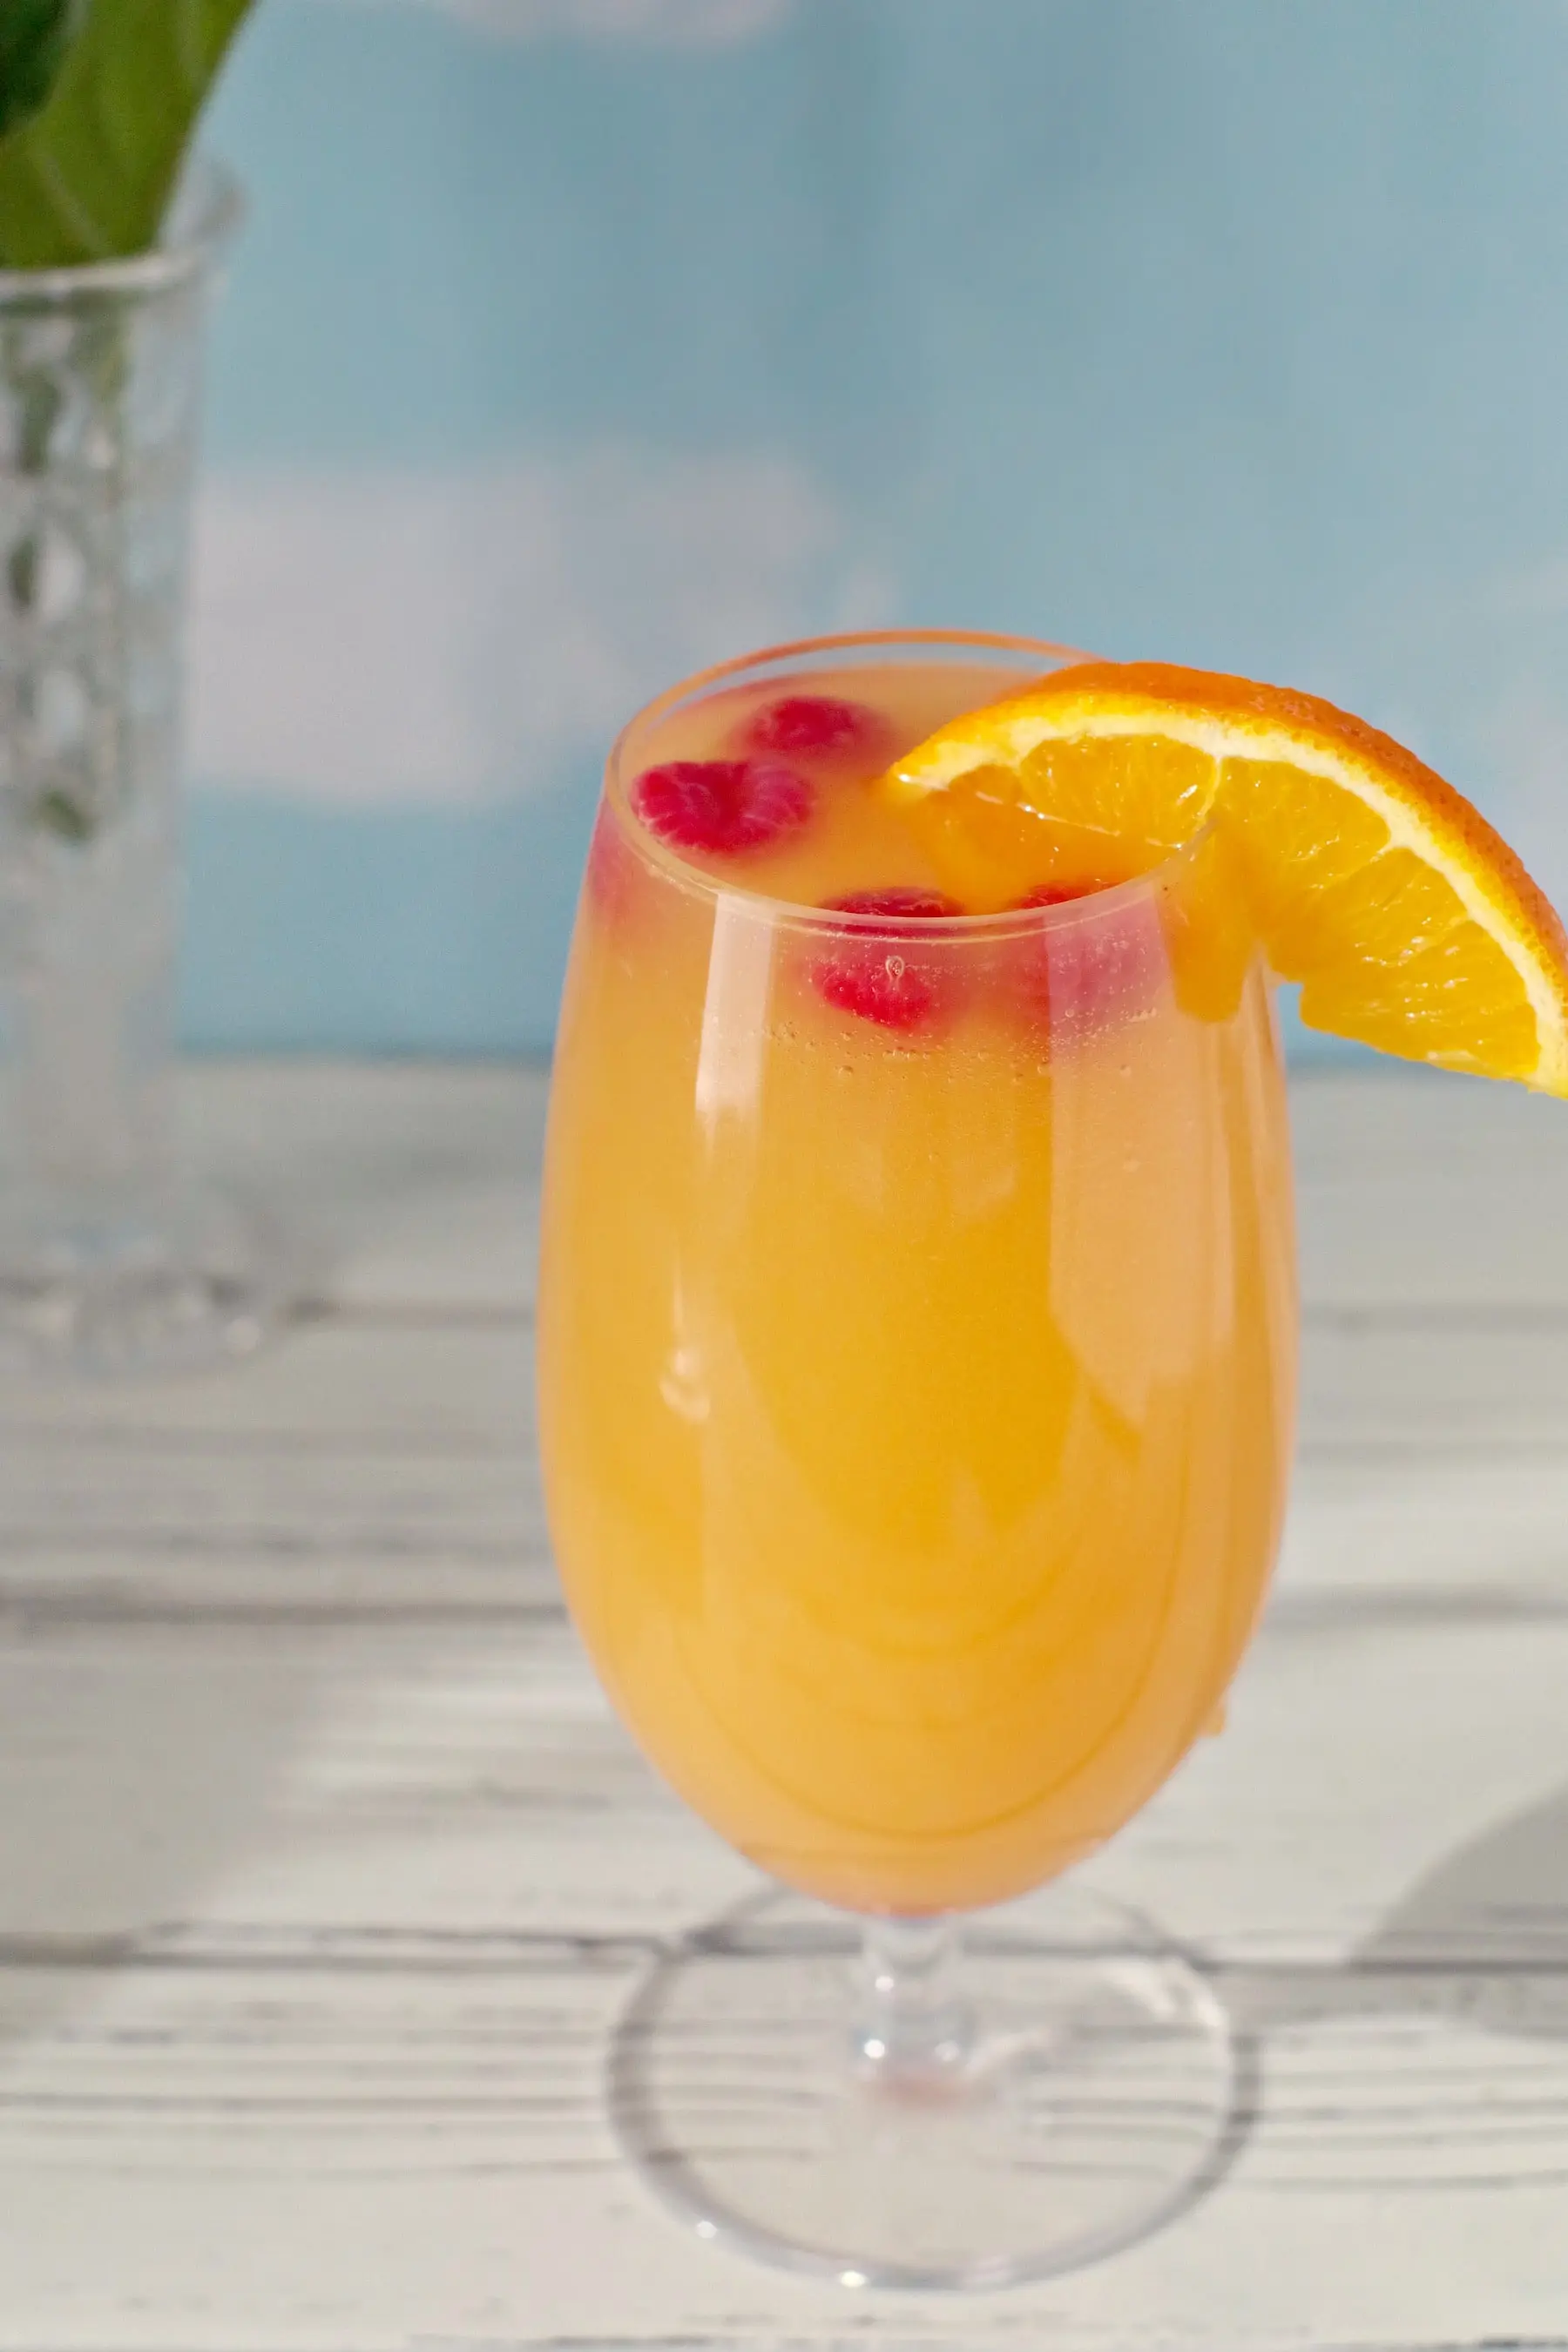 mimosa drink with raspberries and orange garnish